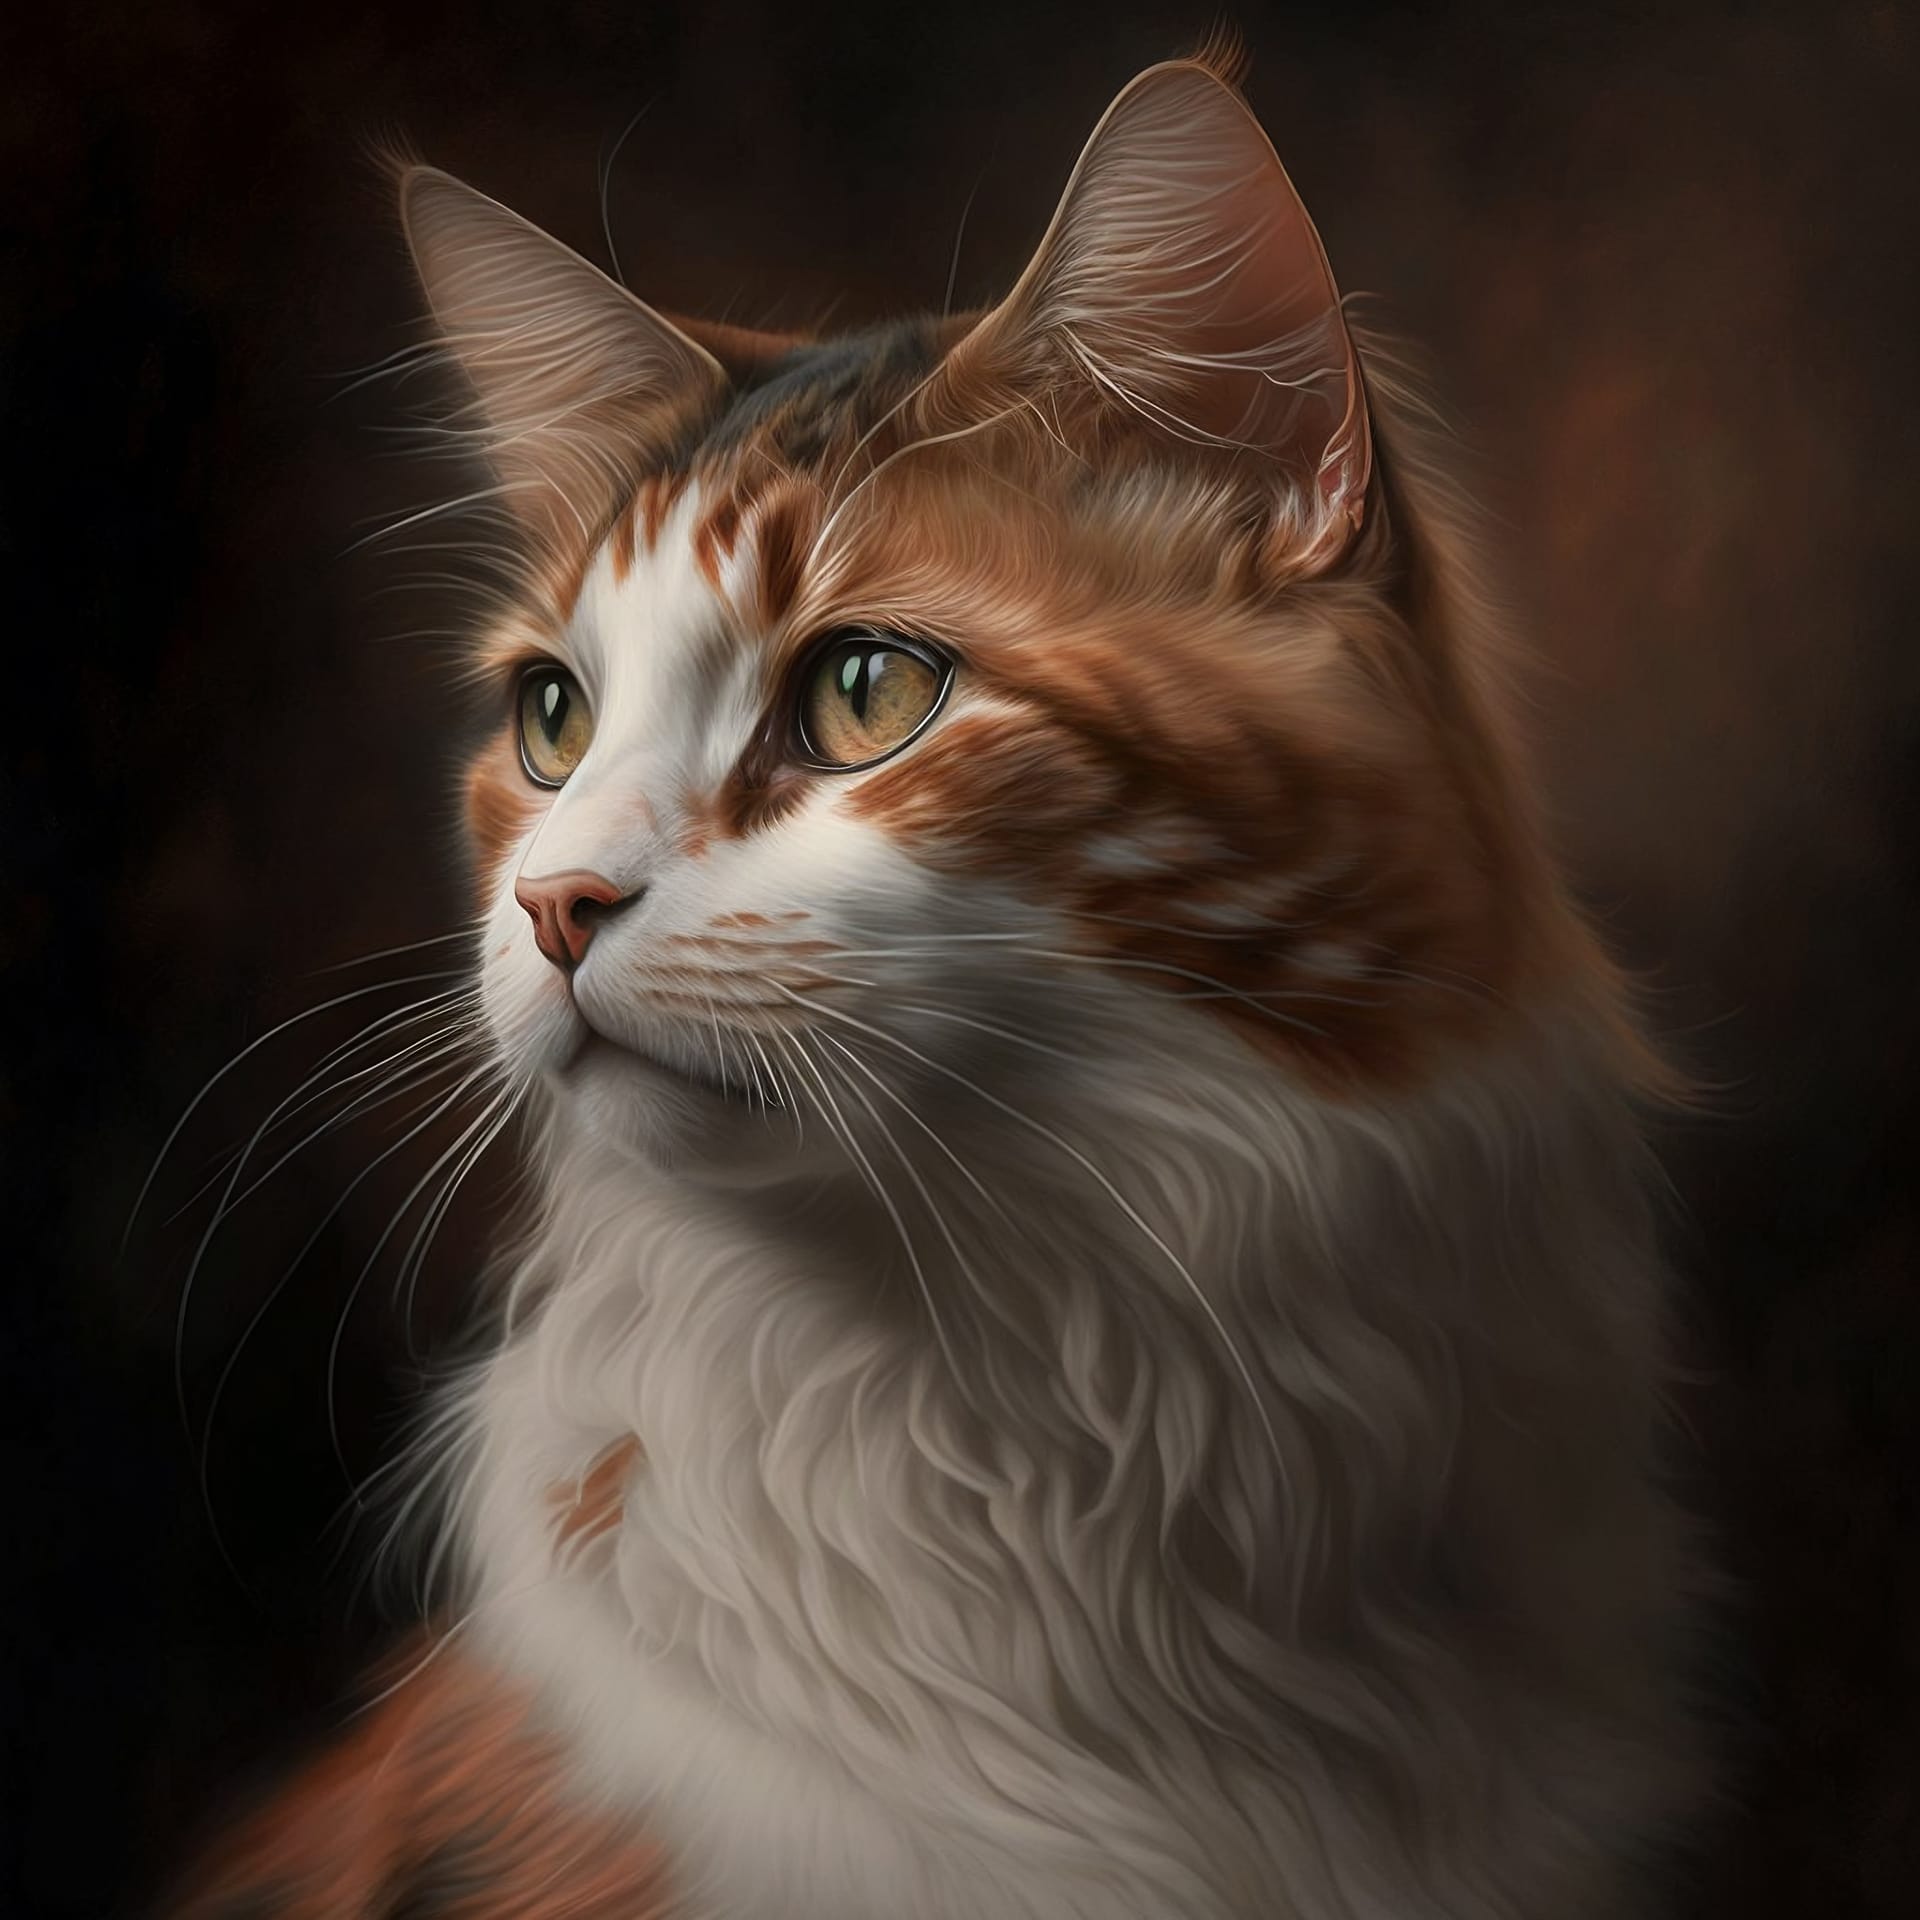 Cat profile picture digital studio portrait digital fine art image